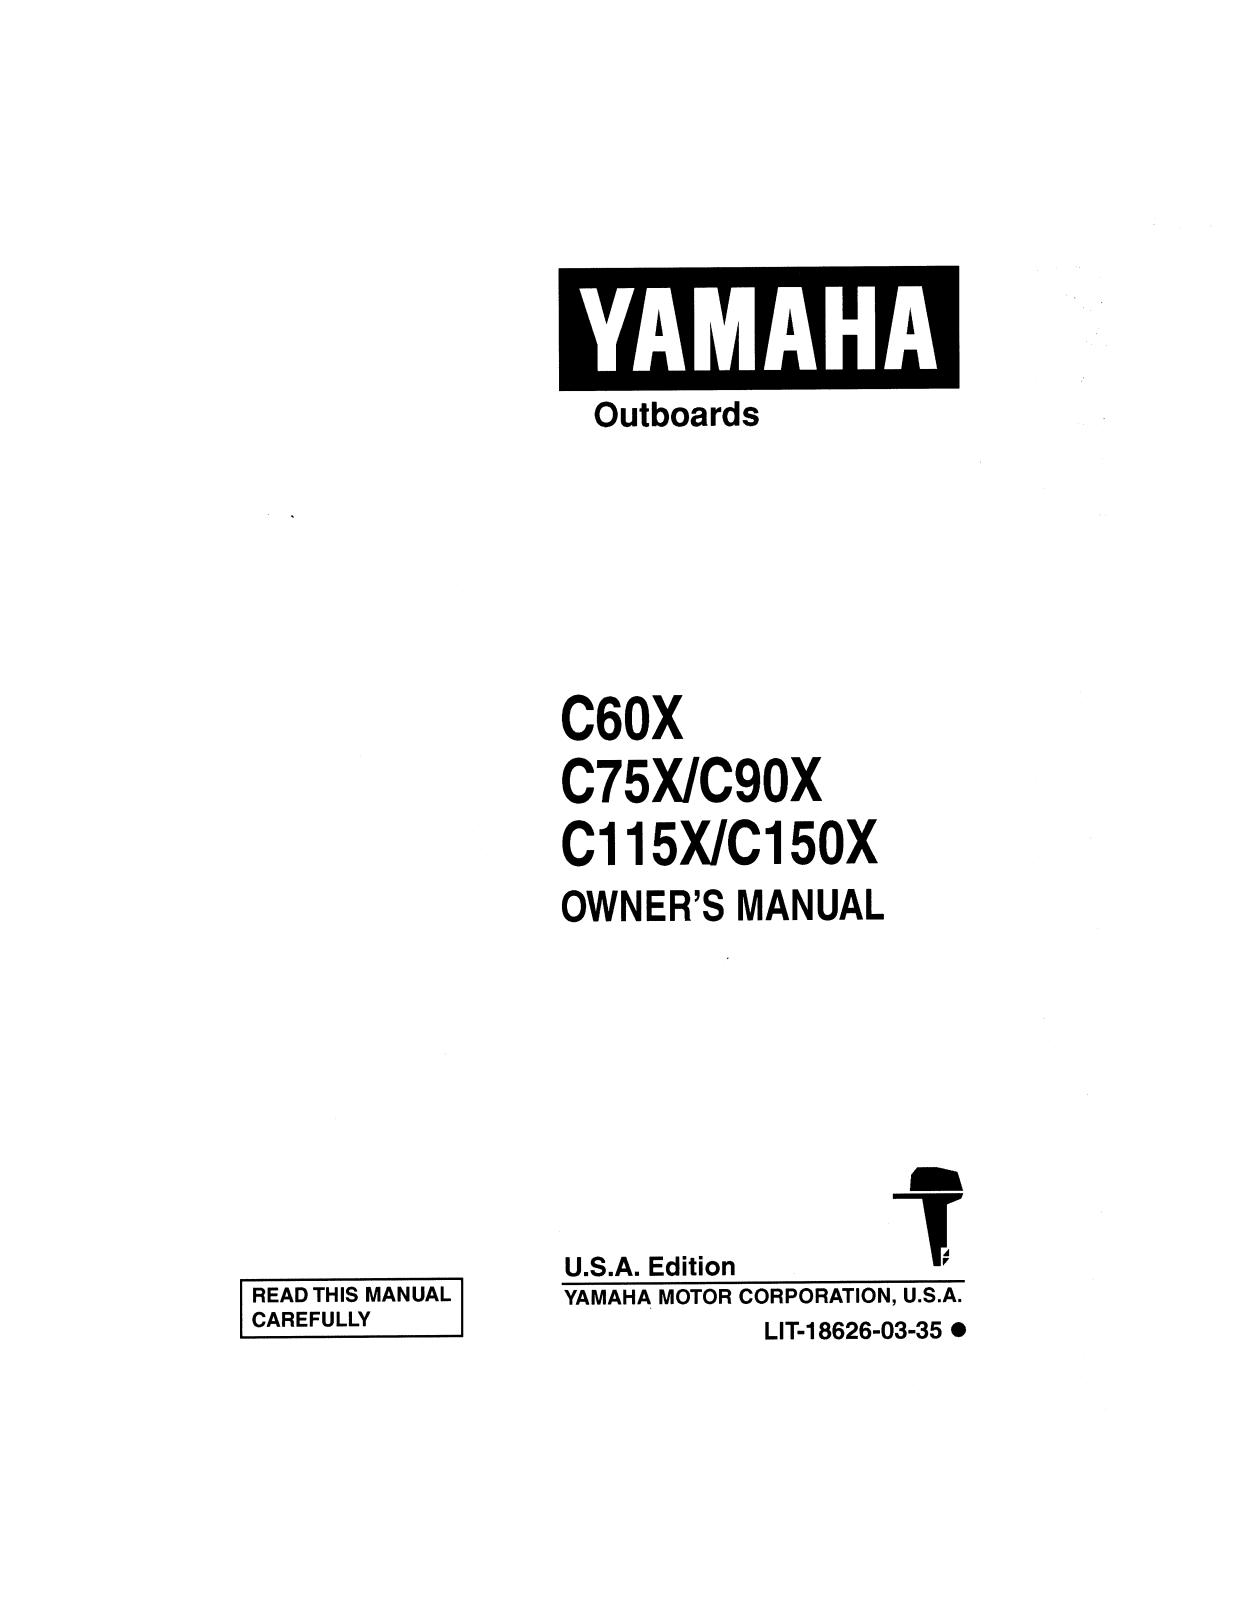 Yamaha C60X, C75X, C90X, C115X, C150X Manual